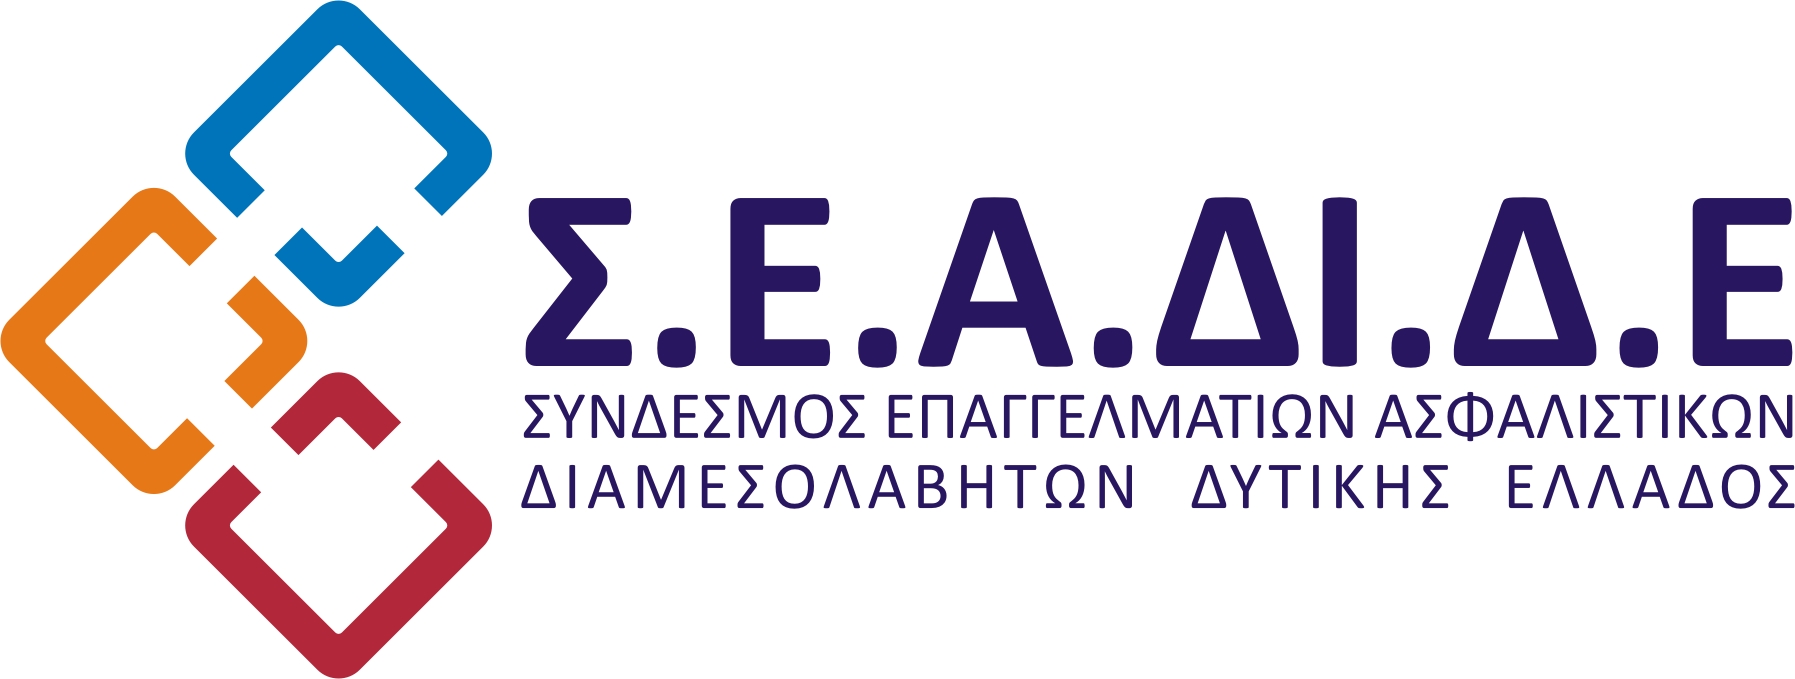 seadide-logo